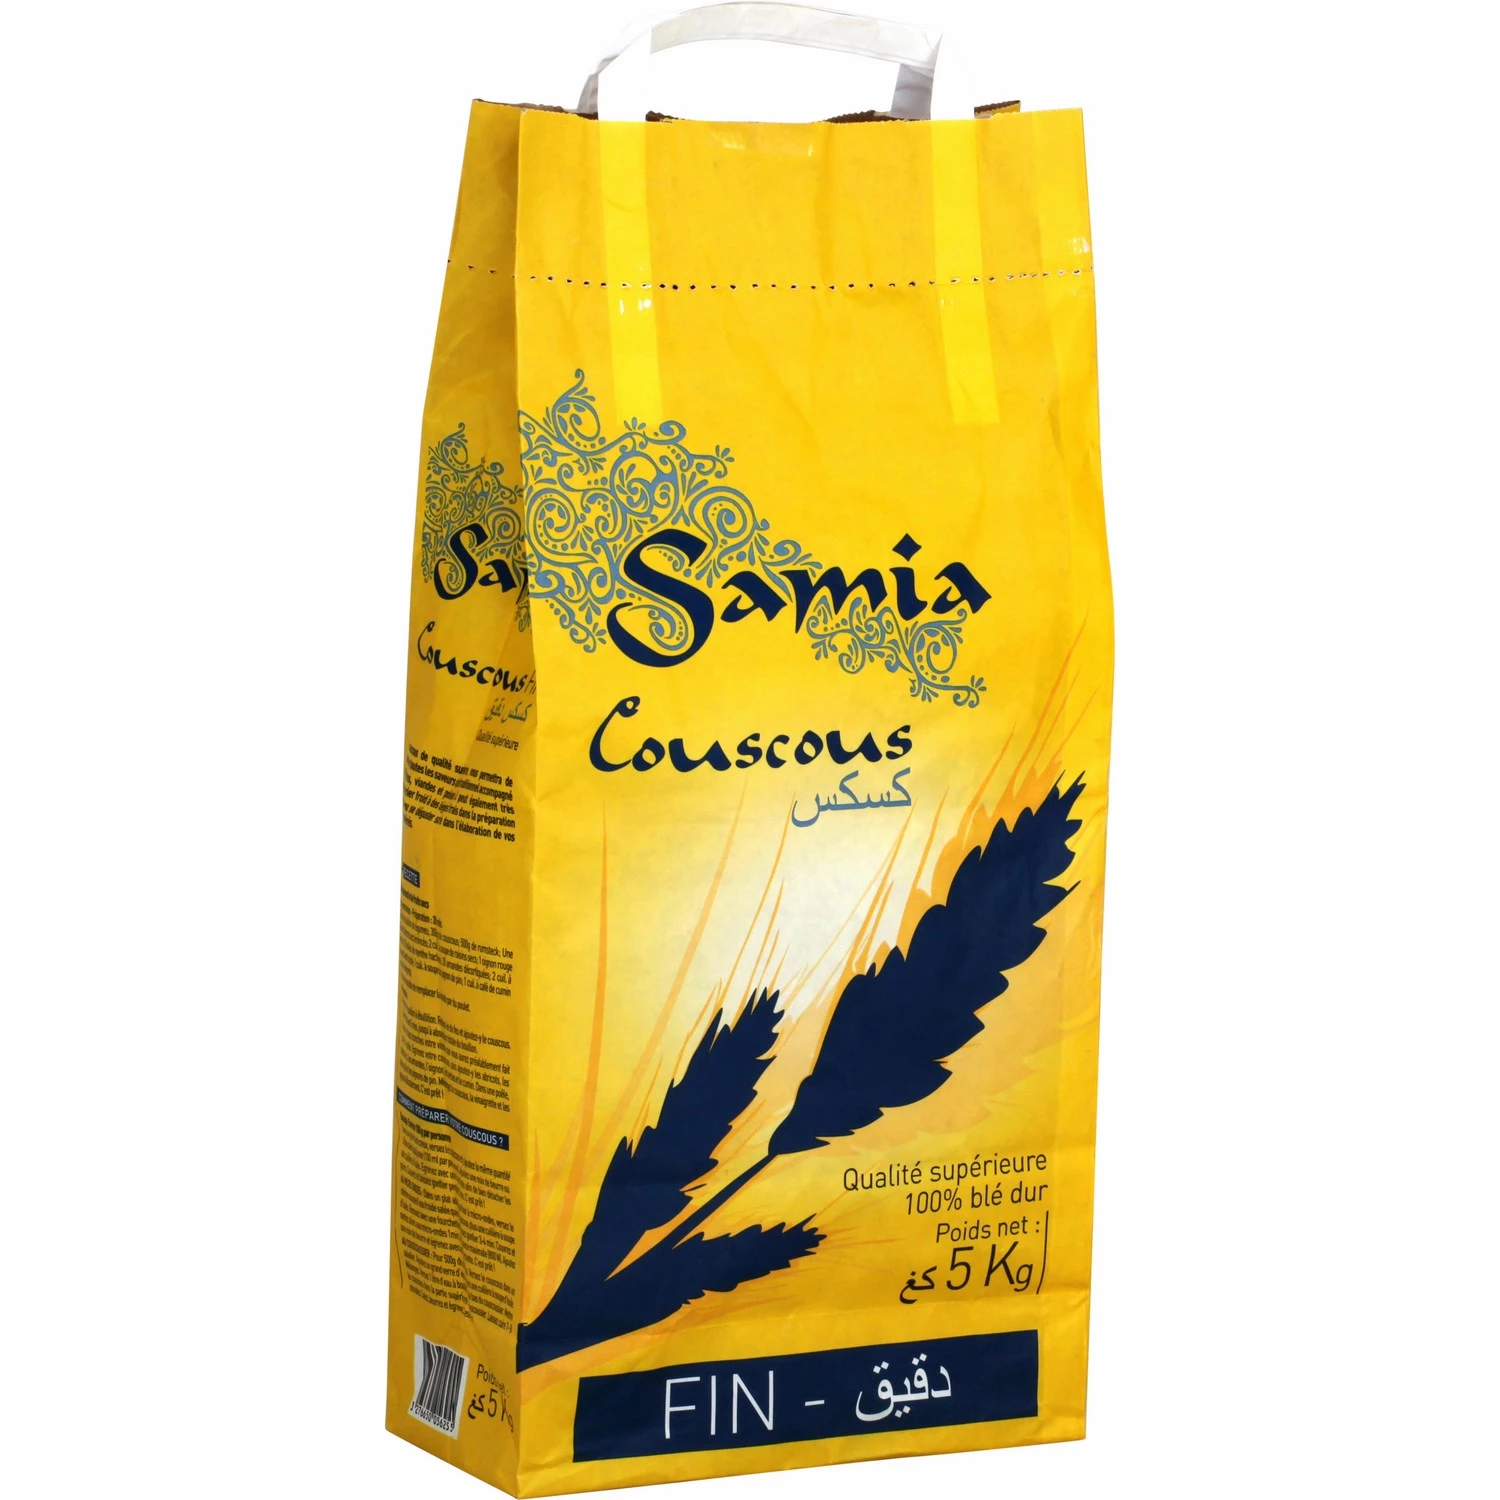 蒸粗麦粉 5 公斤 - SAMIA